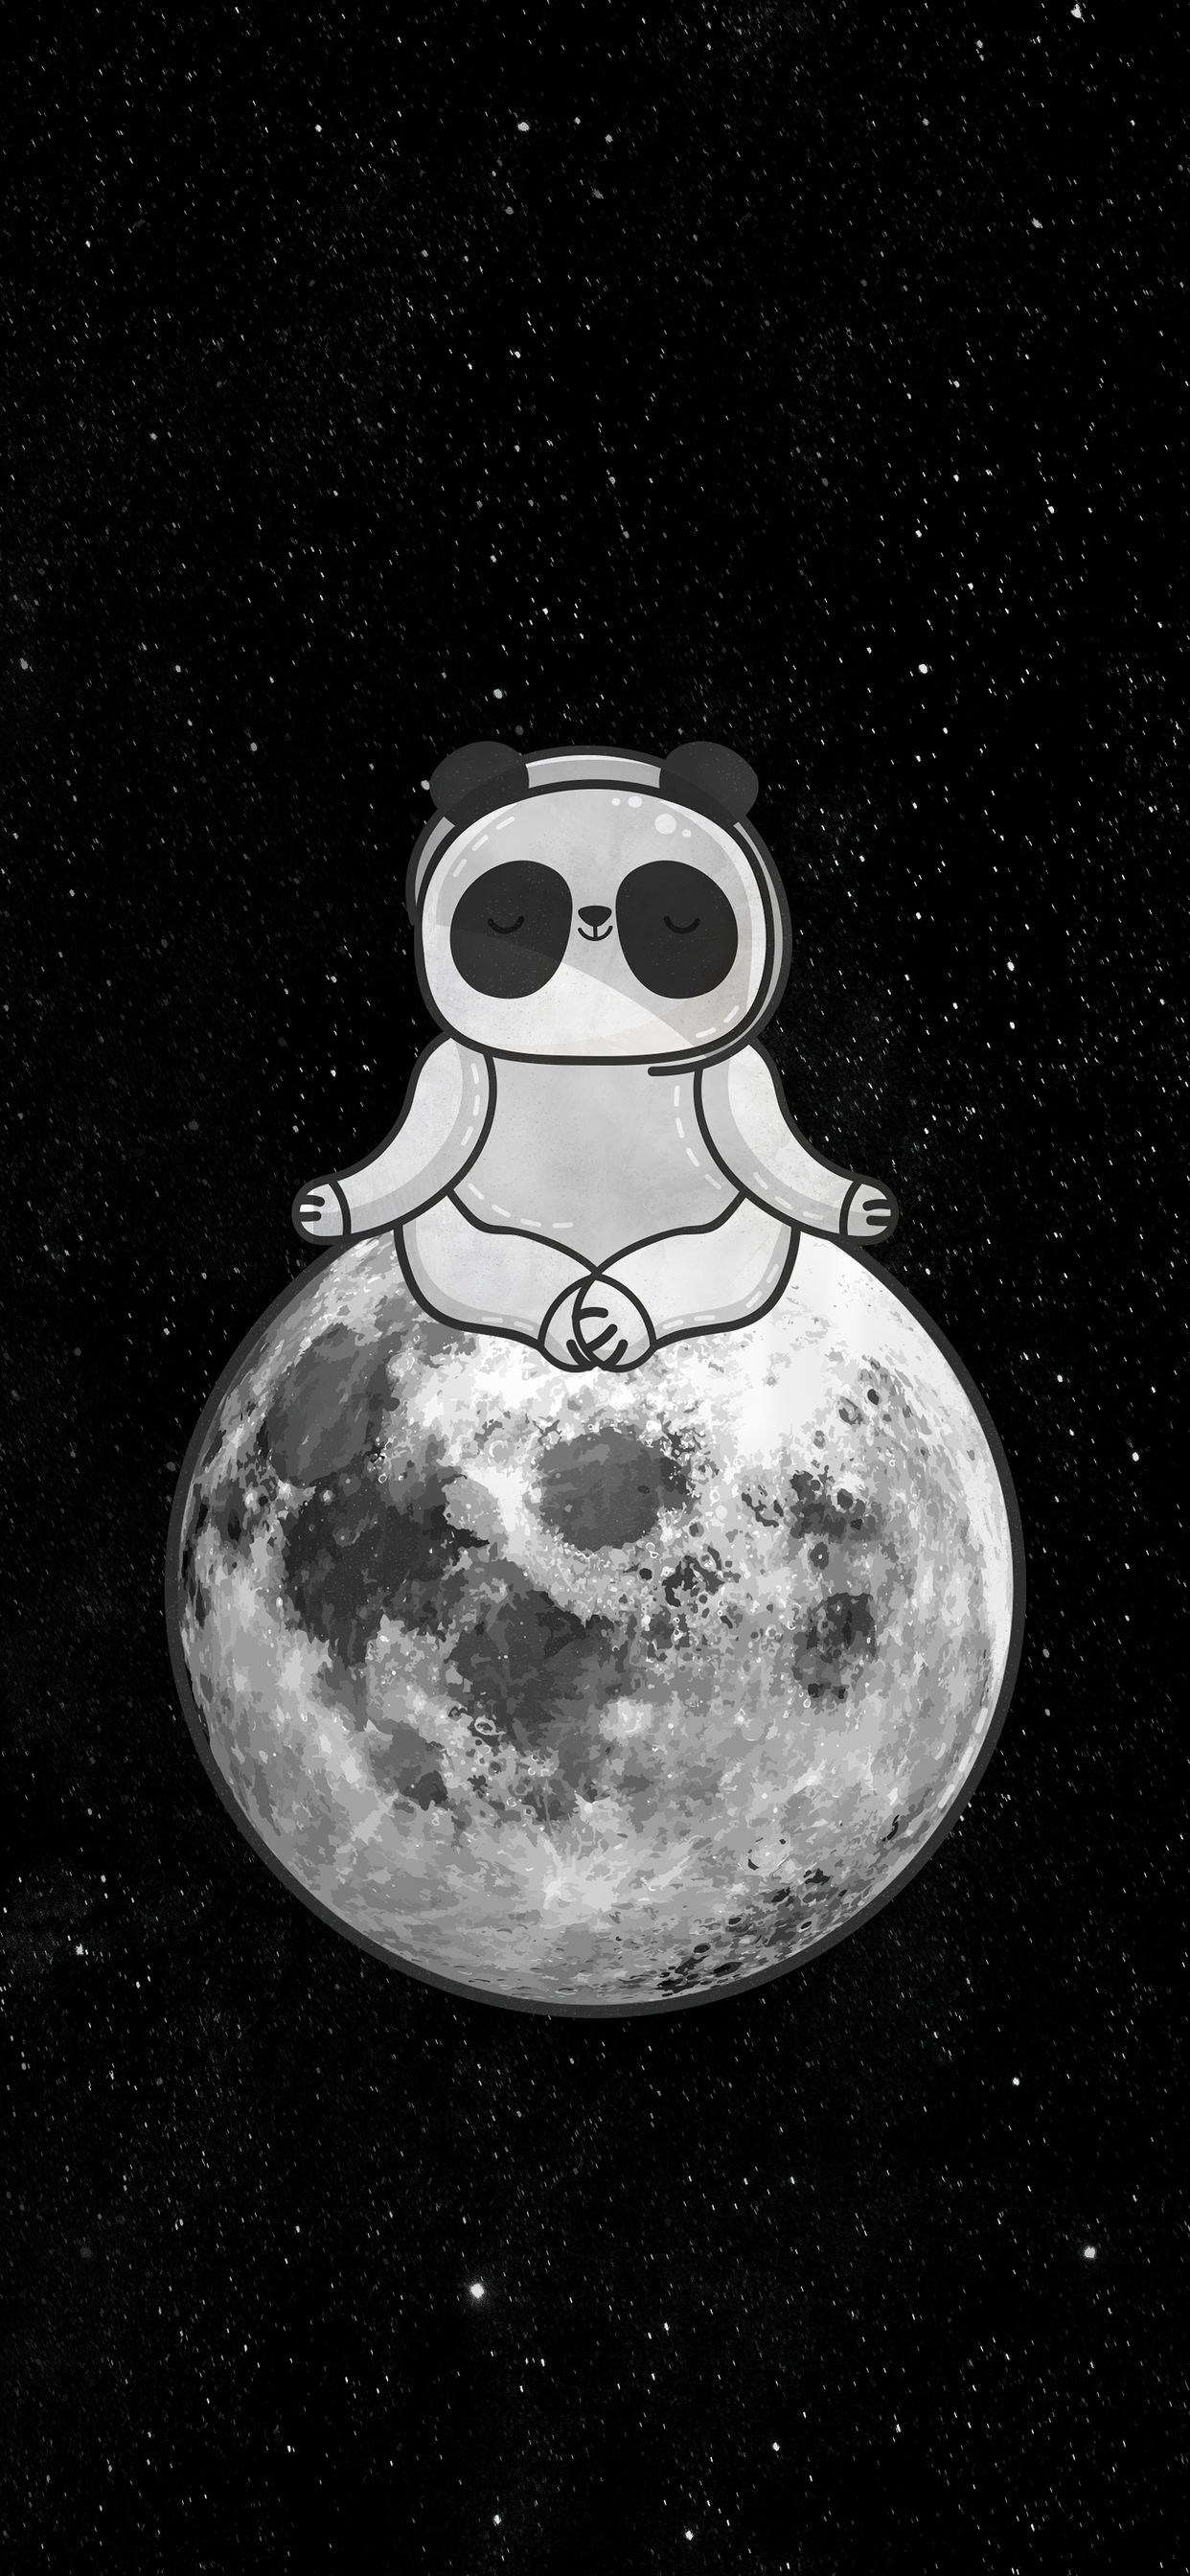 A panda sitting on the moon with sunglasses - Panda